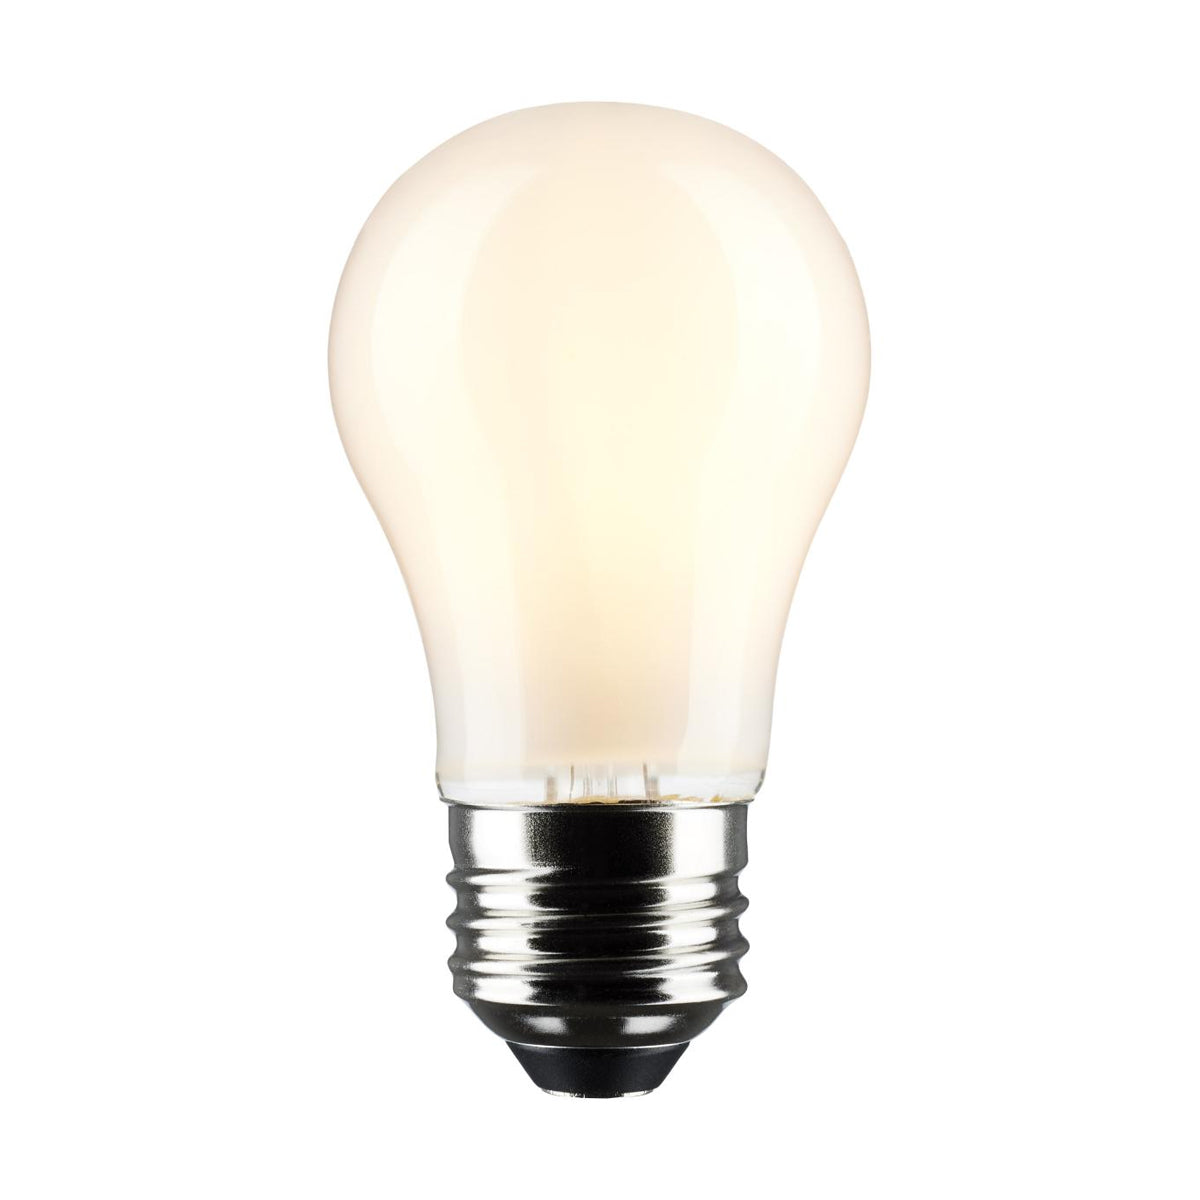 A15 Standard LED Bulb, 6 Watt, 450 Lumens, 2700K, E26 Medium Base, Frosted Finish, Pack Of 2